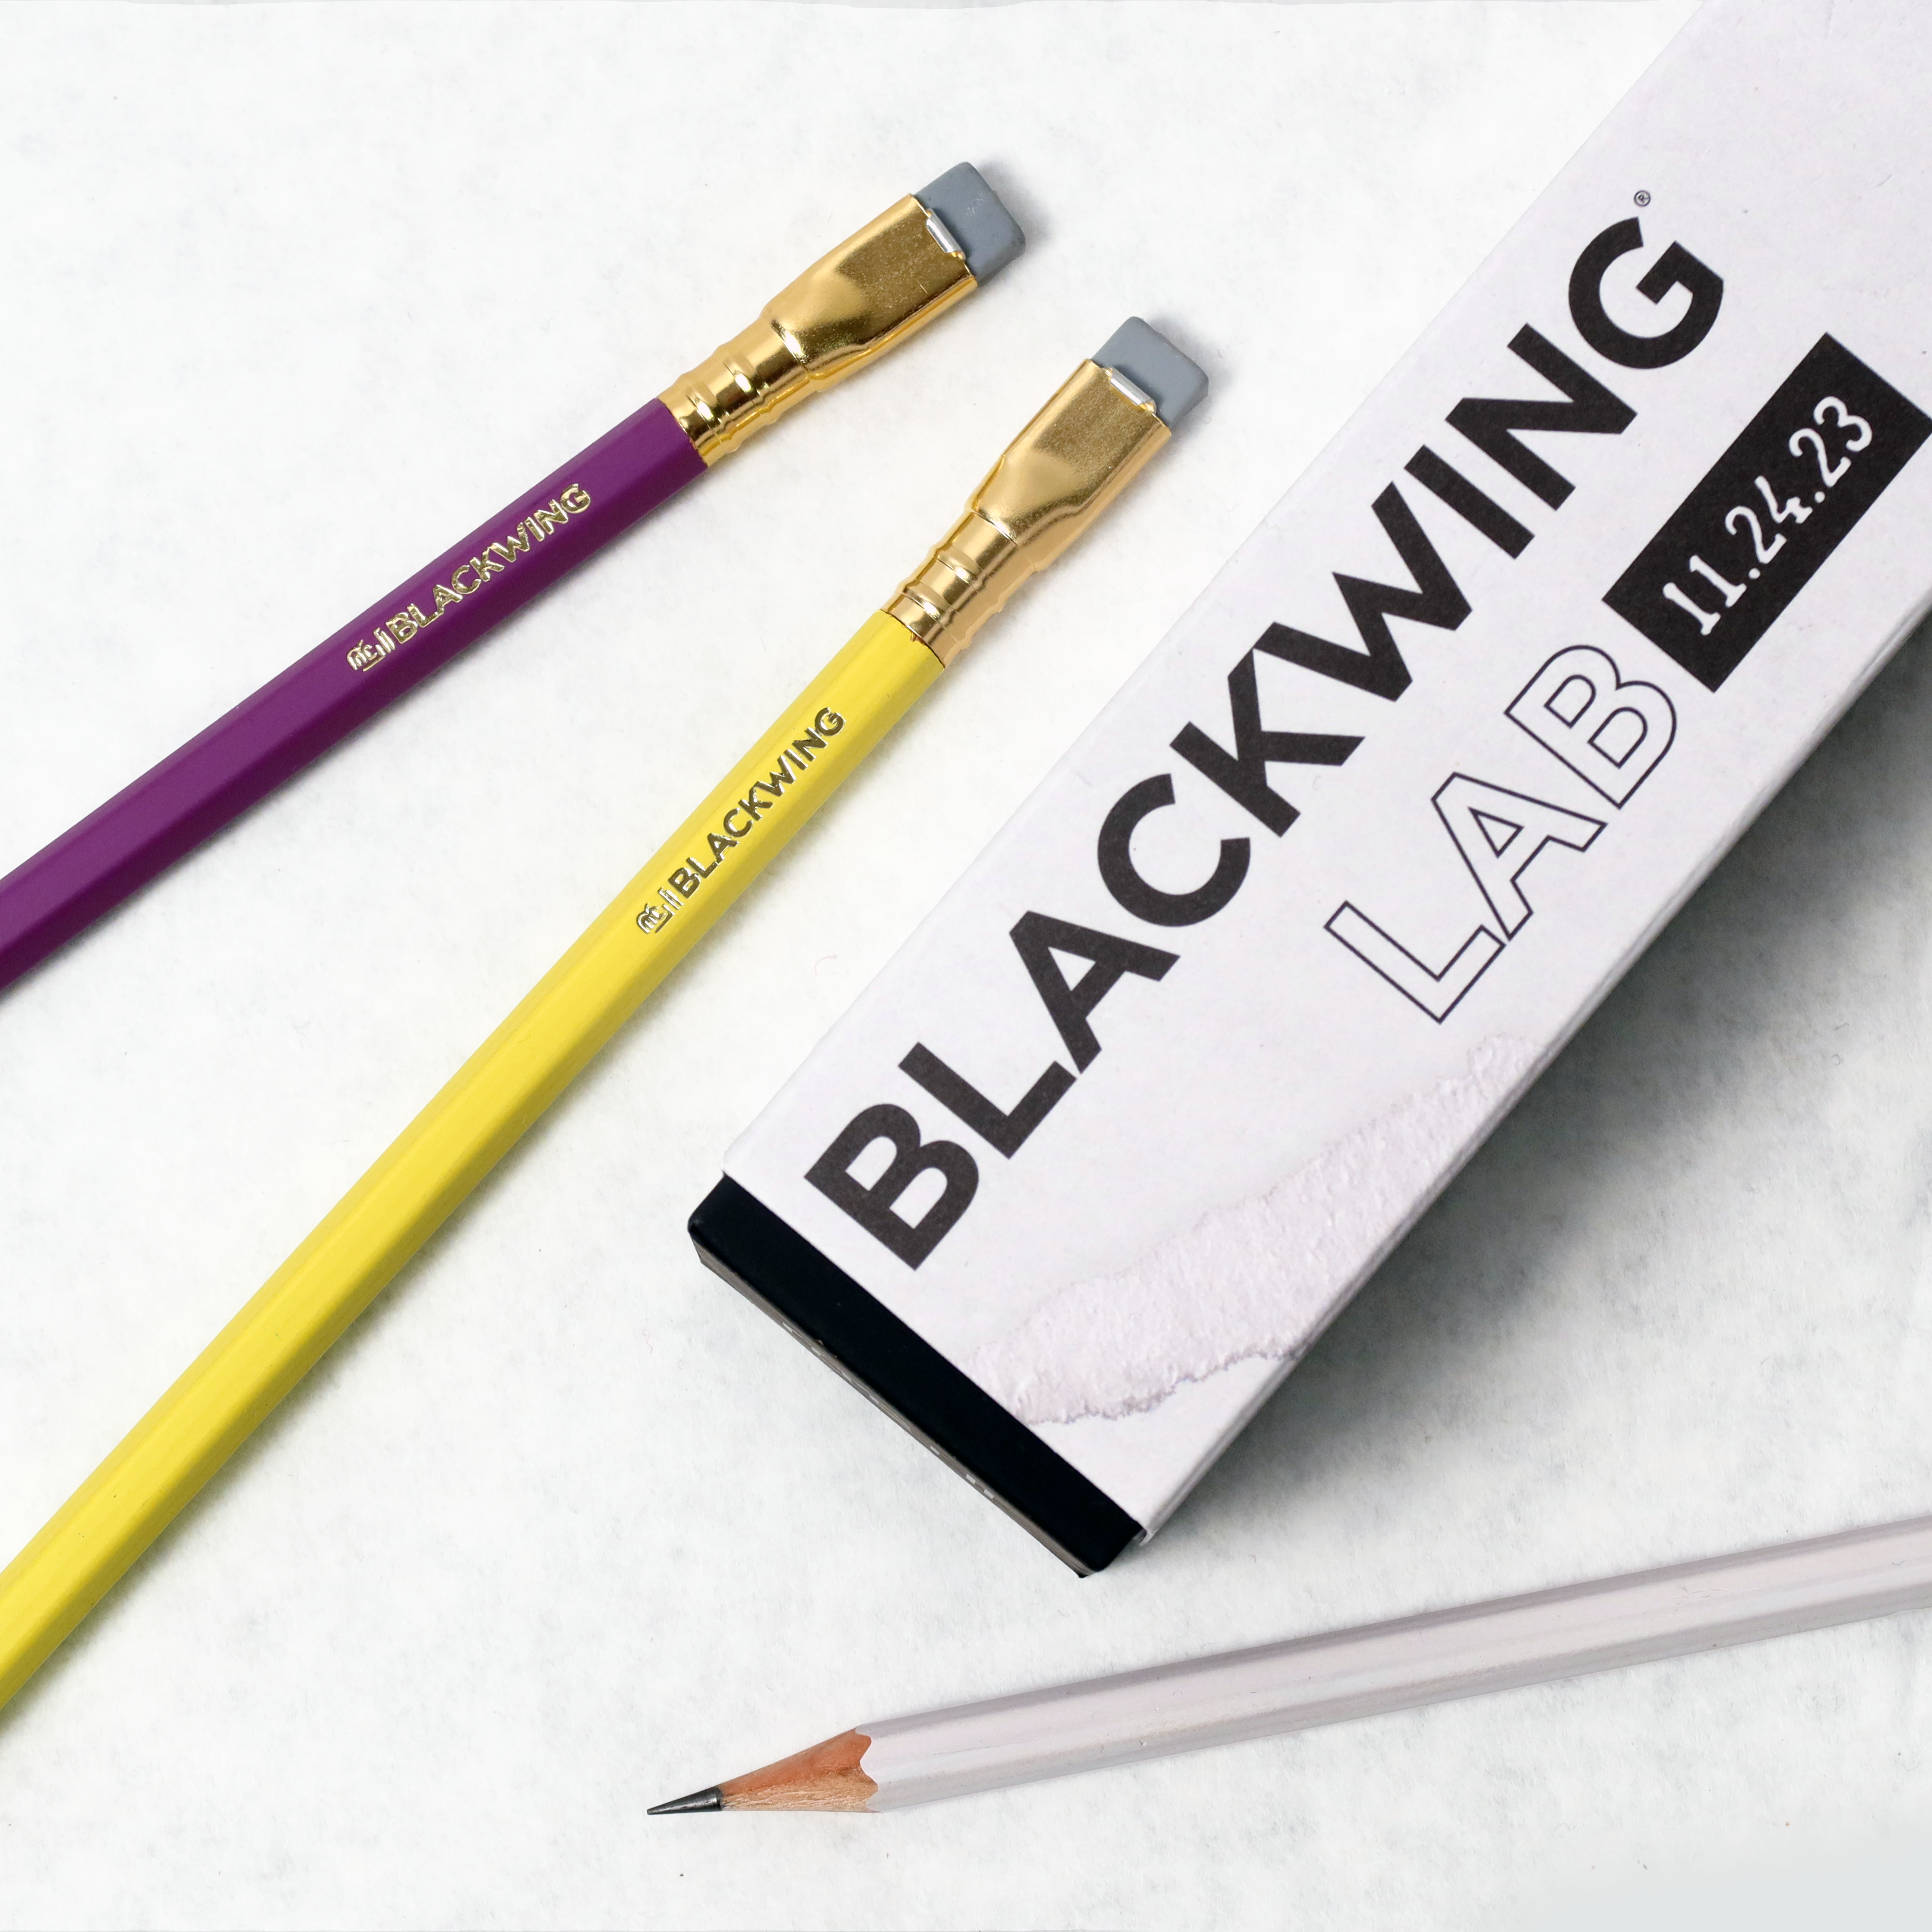 Blackwing Pencil Sample Pack - 4 Core Pencils